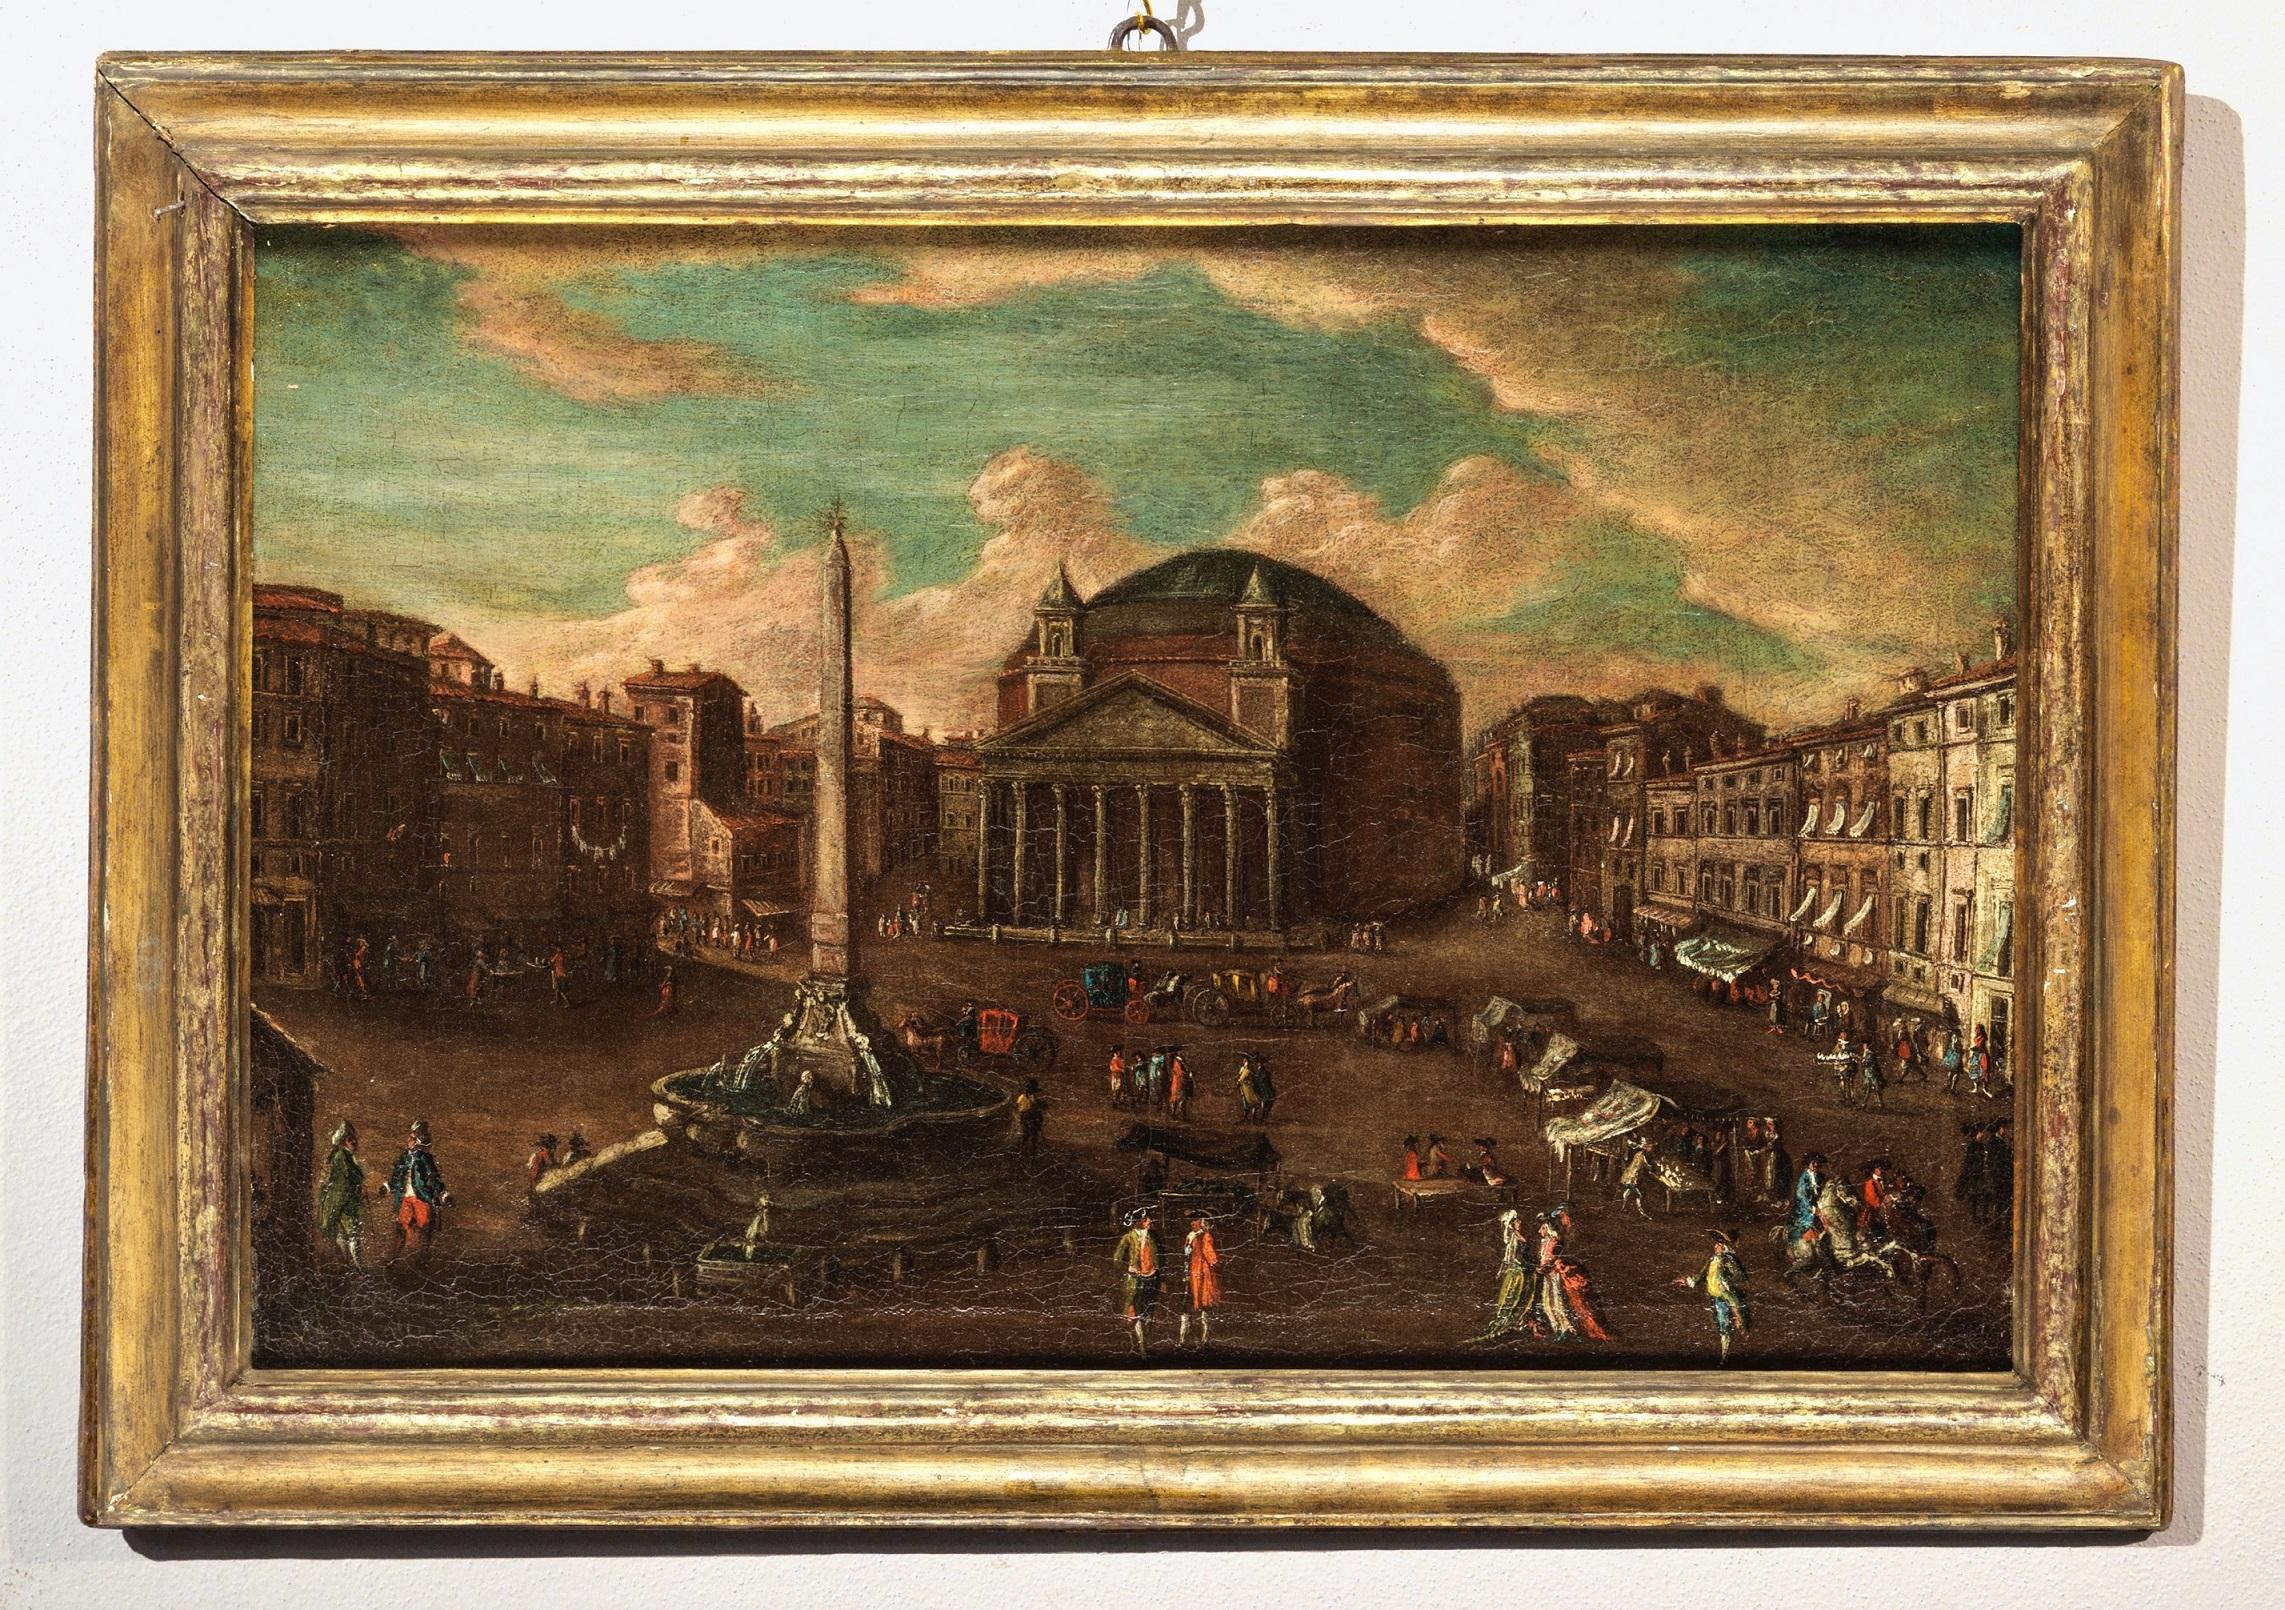 Vetturali Landscape Rome Pantheon Paint OIl on canvas Old master 18th Century - Painting by Gaetano Vetturali 